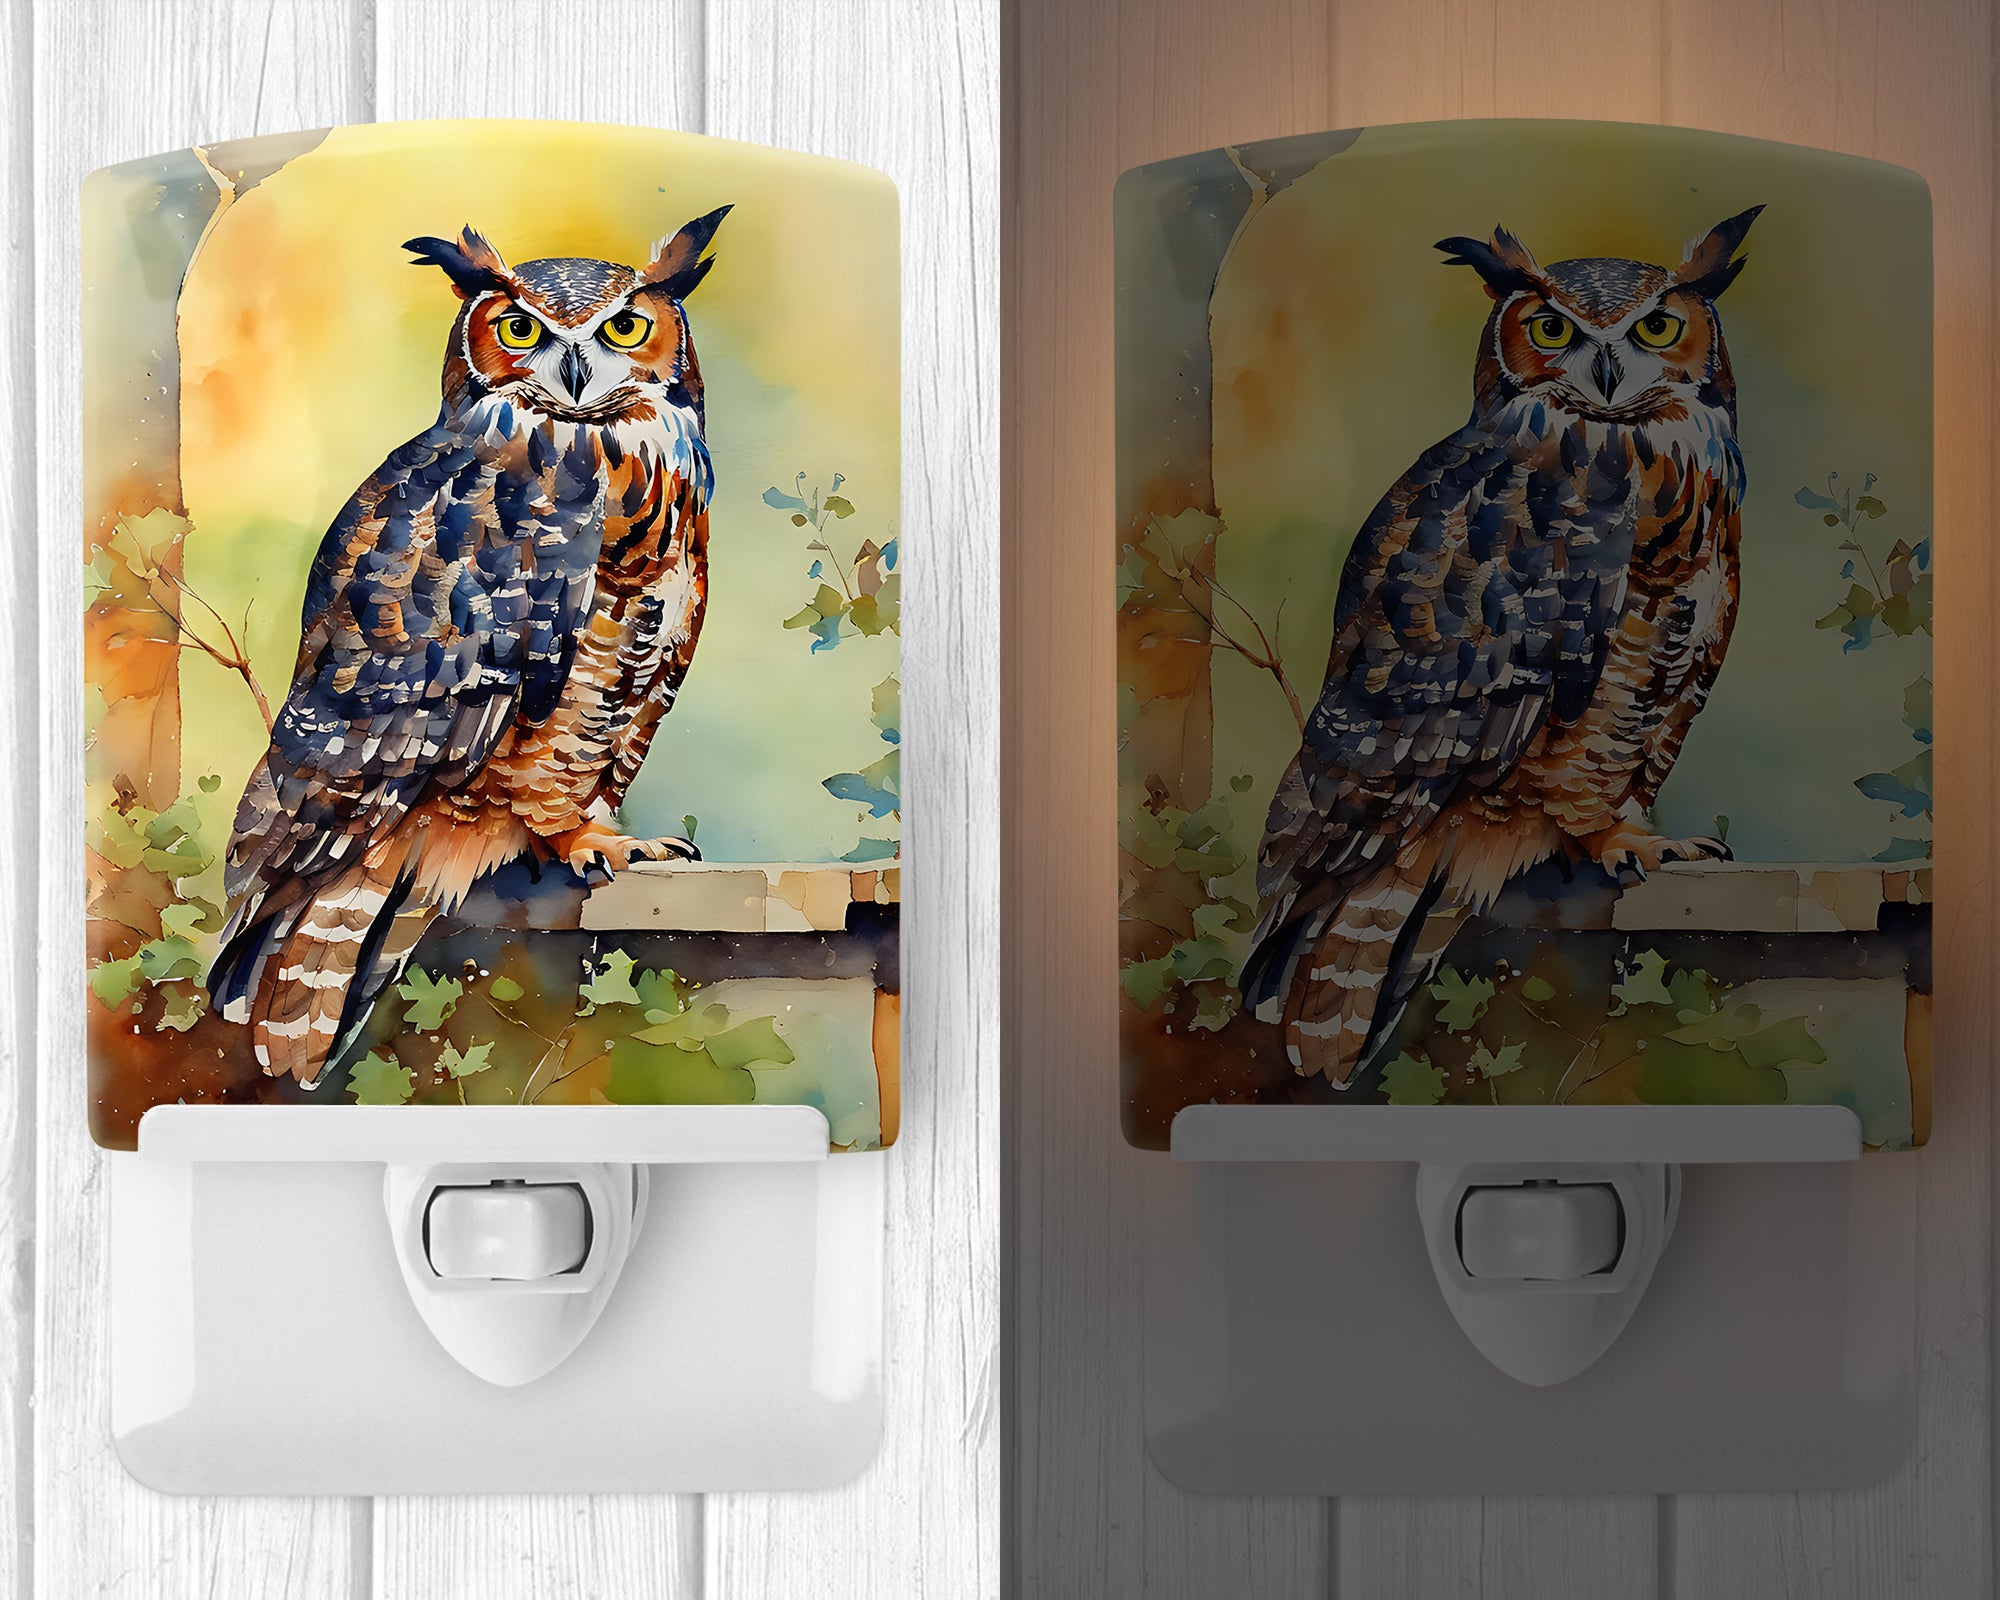 Buy this Great Horned Owl Ceramic Night Light